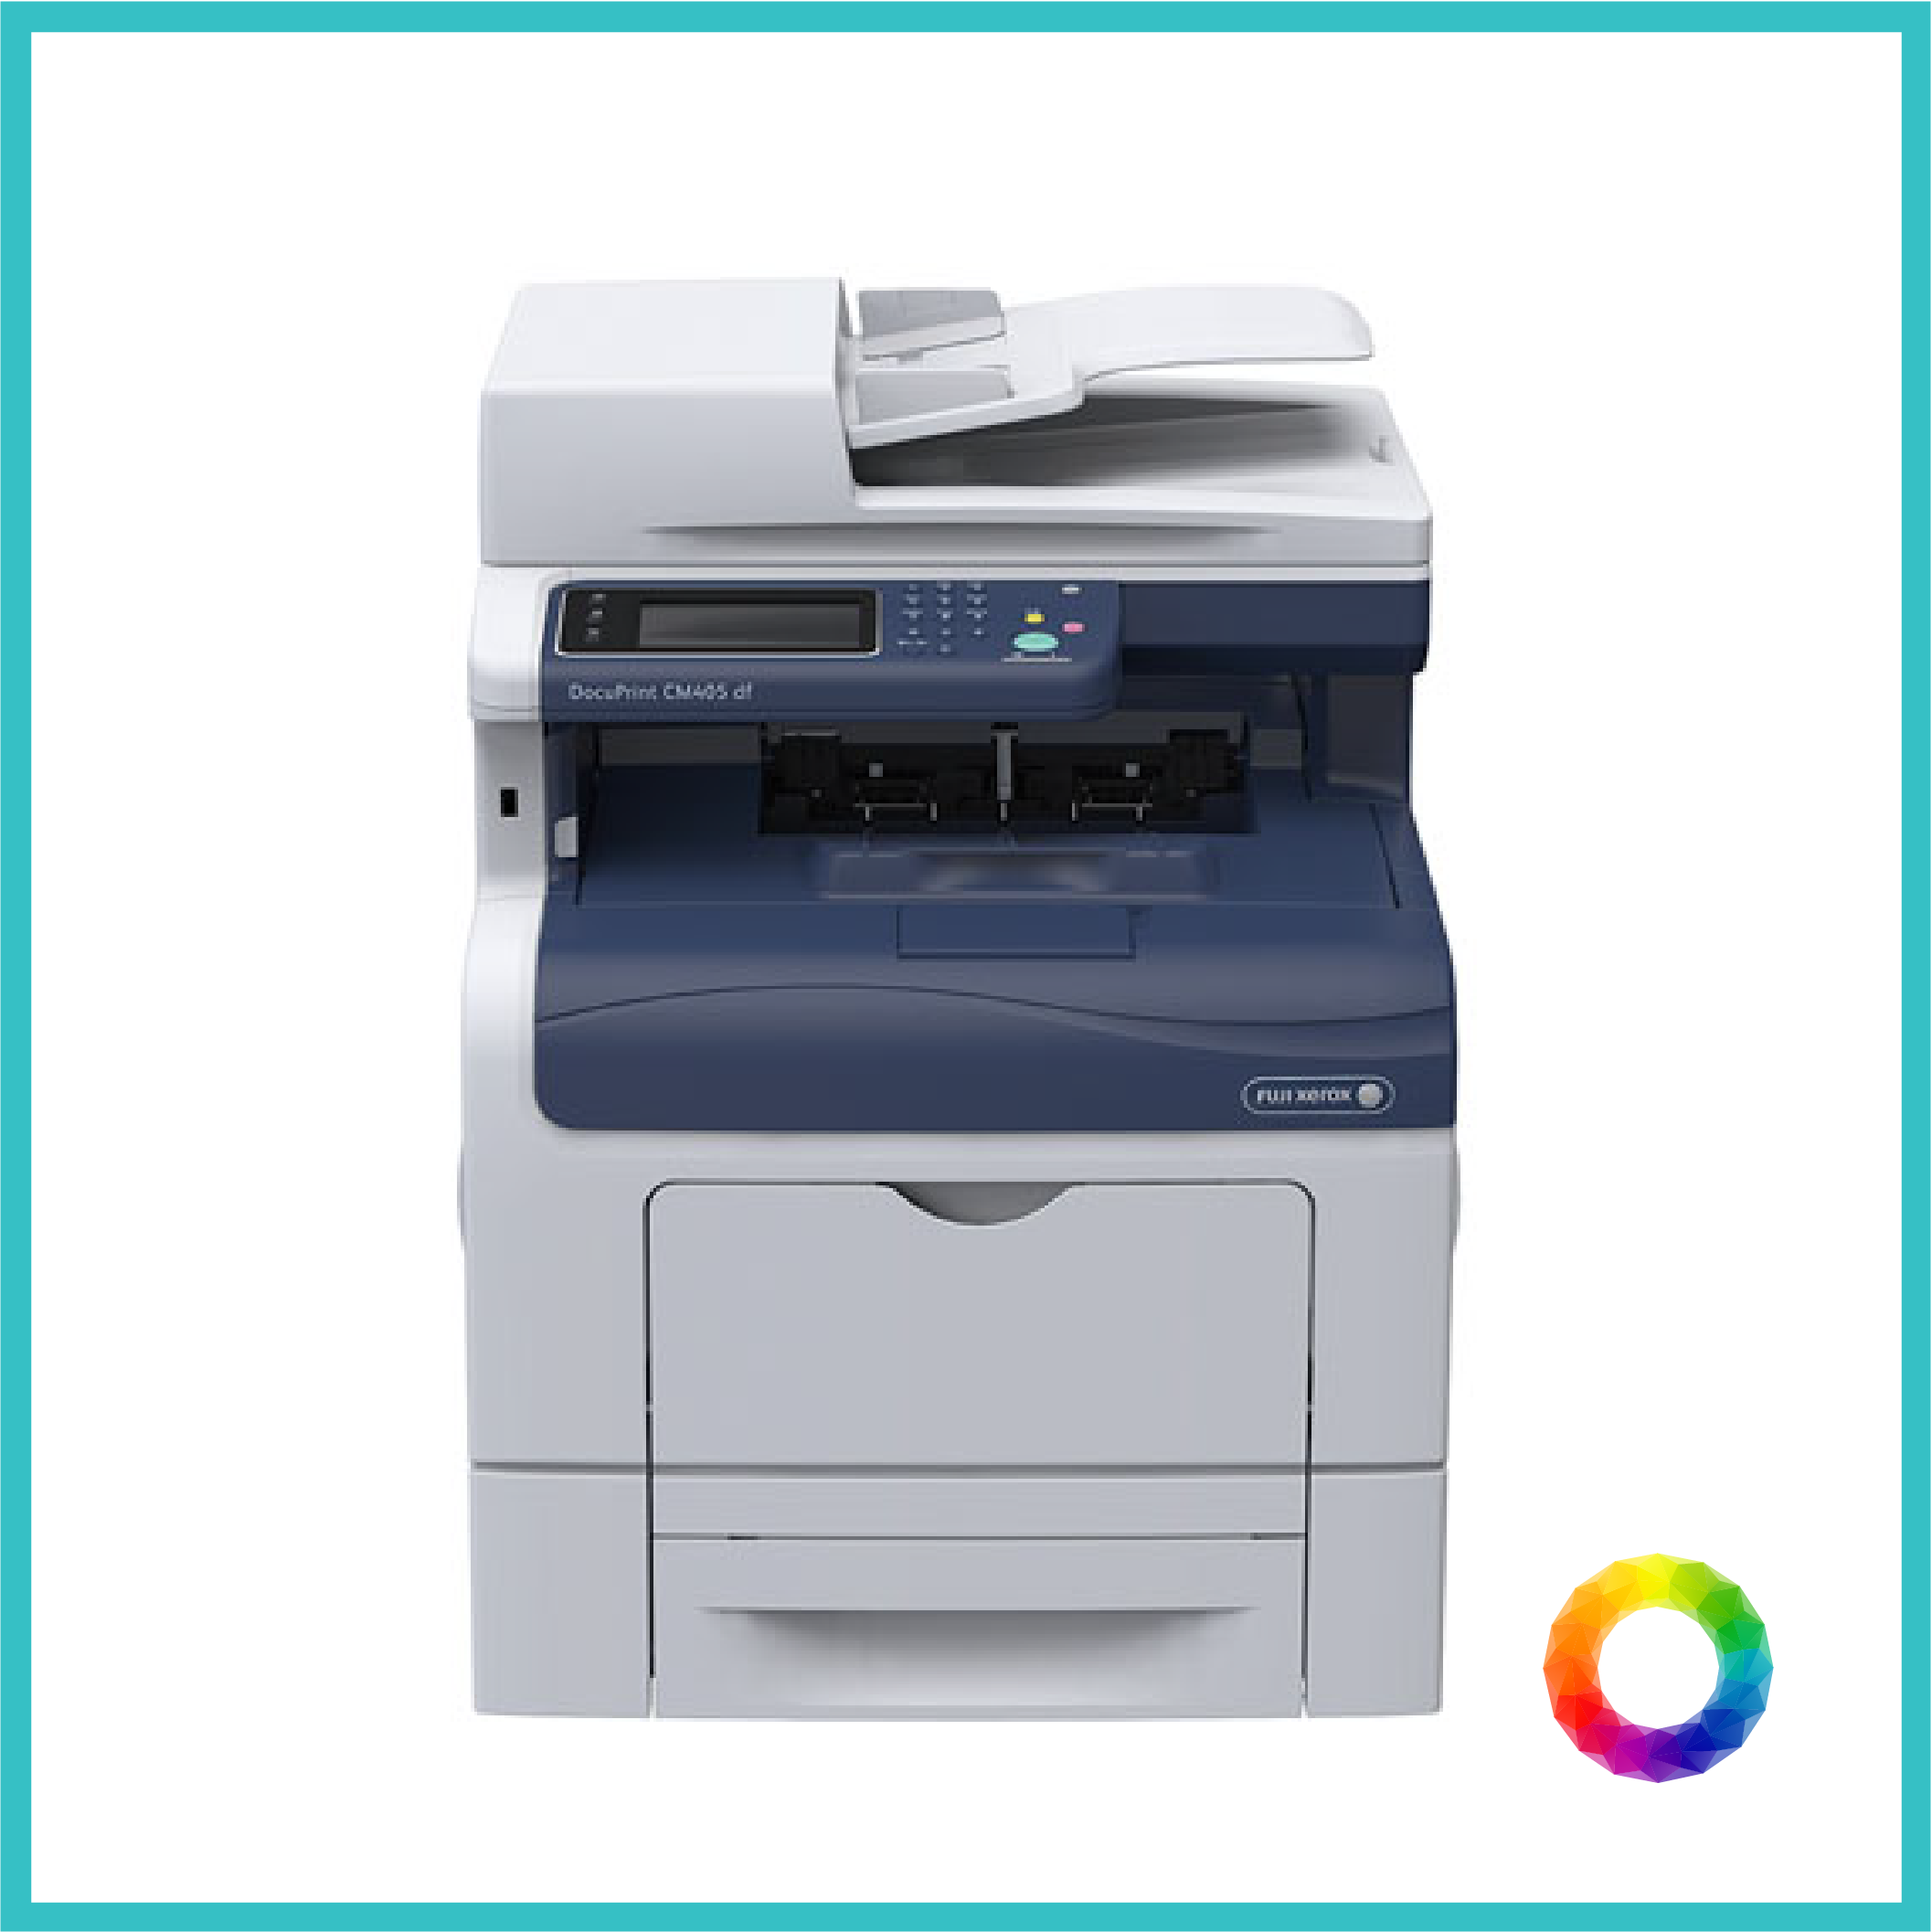 multipurpose Xerox CM405 photocopier